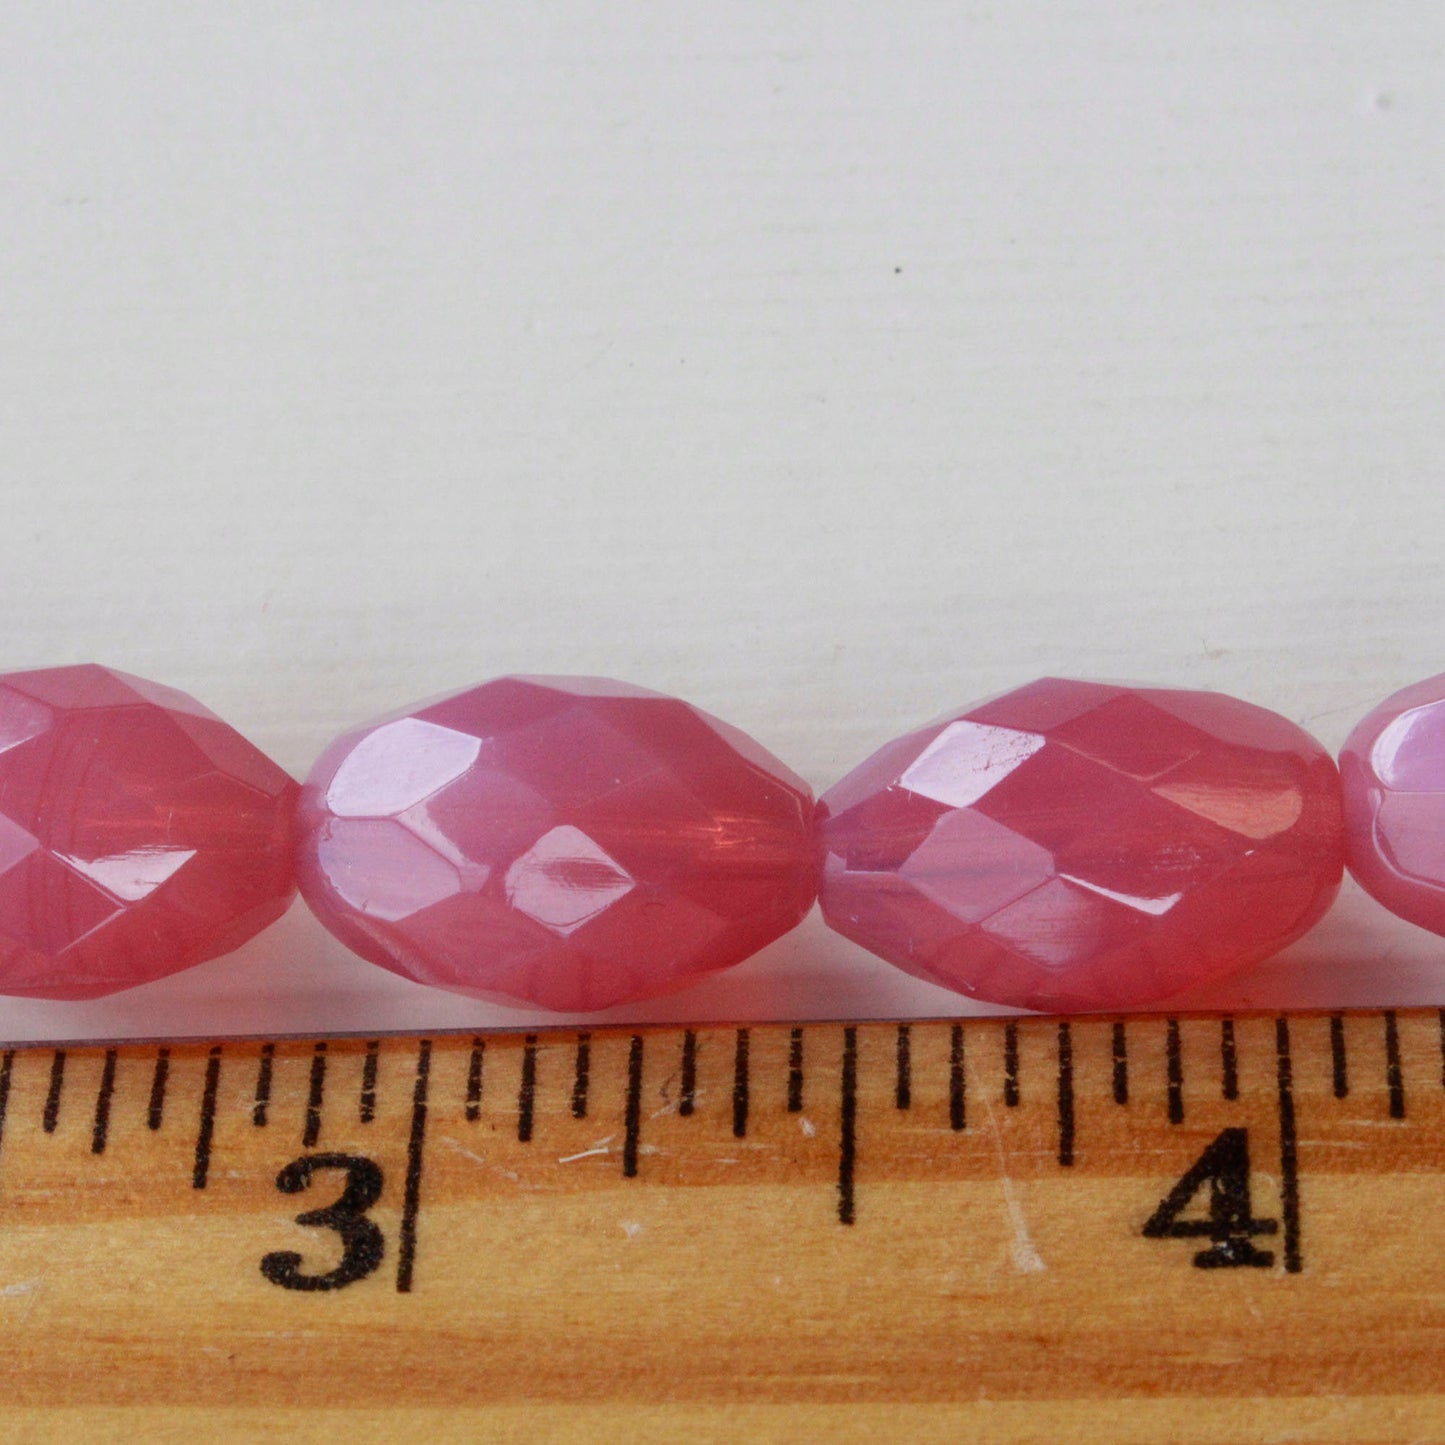 10x15mm Firepolished Glass Oval Beads - Pink Opaline - 4 Beads